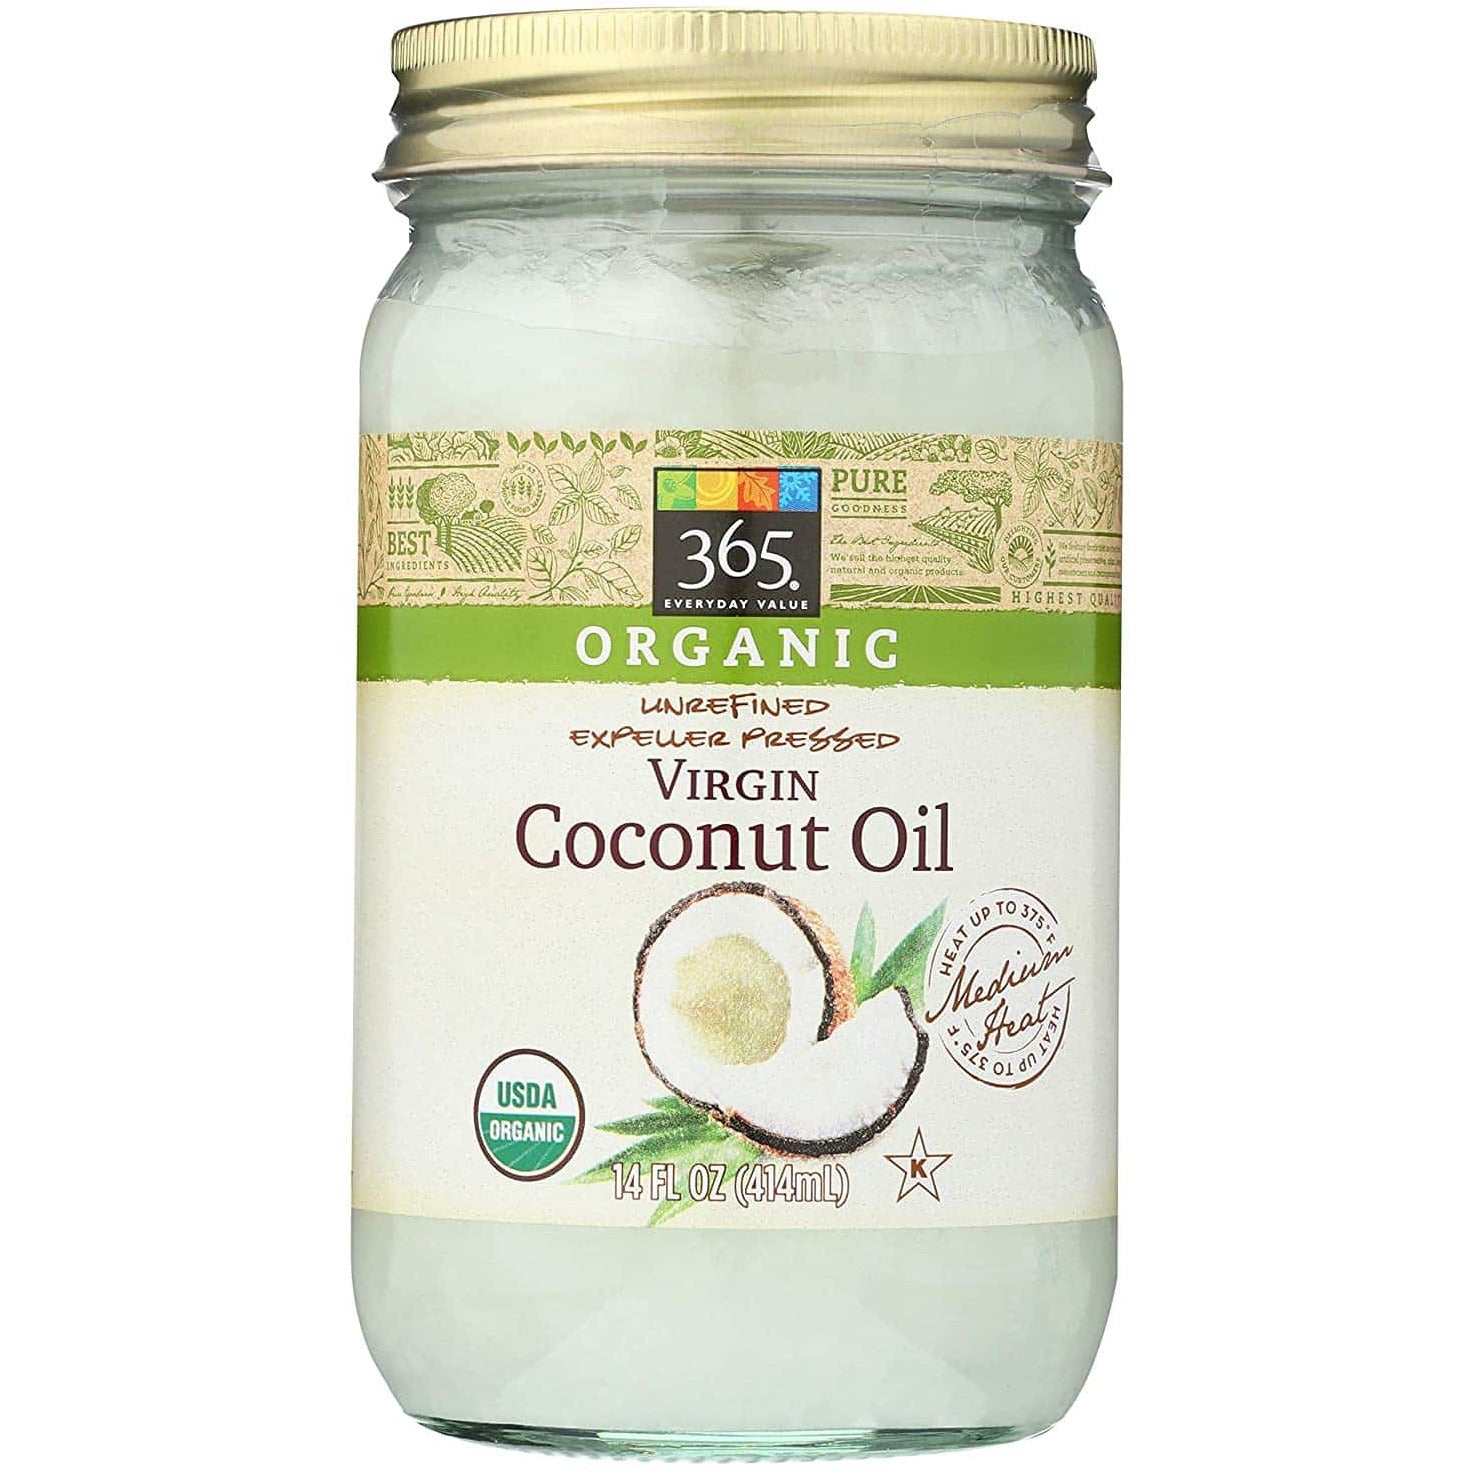 Organic Virgin Coconut Oil, 14 fl oz